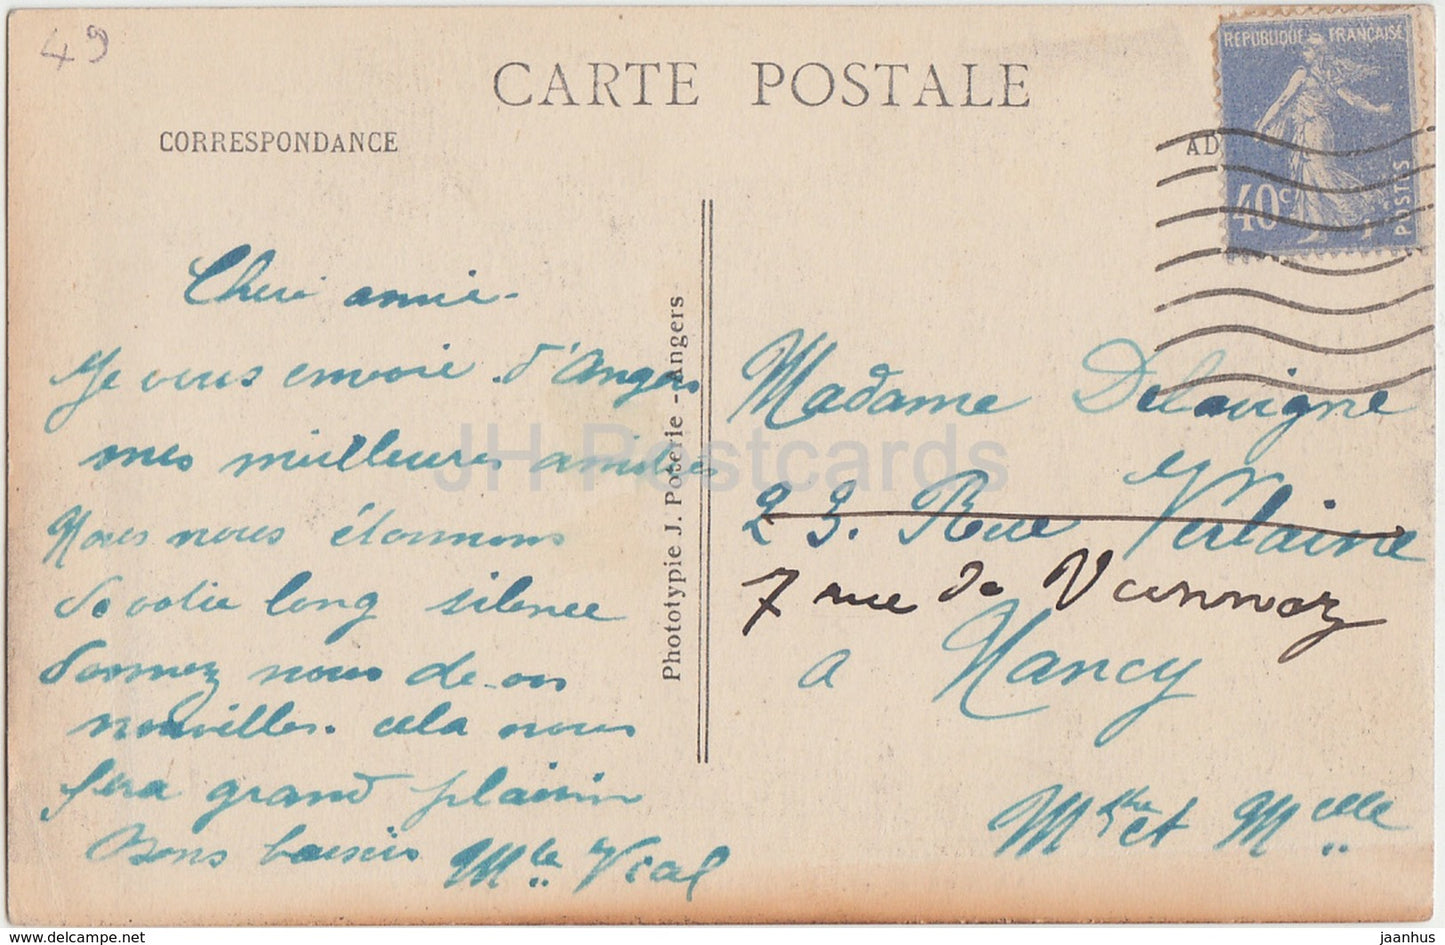 Angers - Chateau du Roi de Pologne - castle - 21 - old postcard - France - used